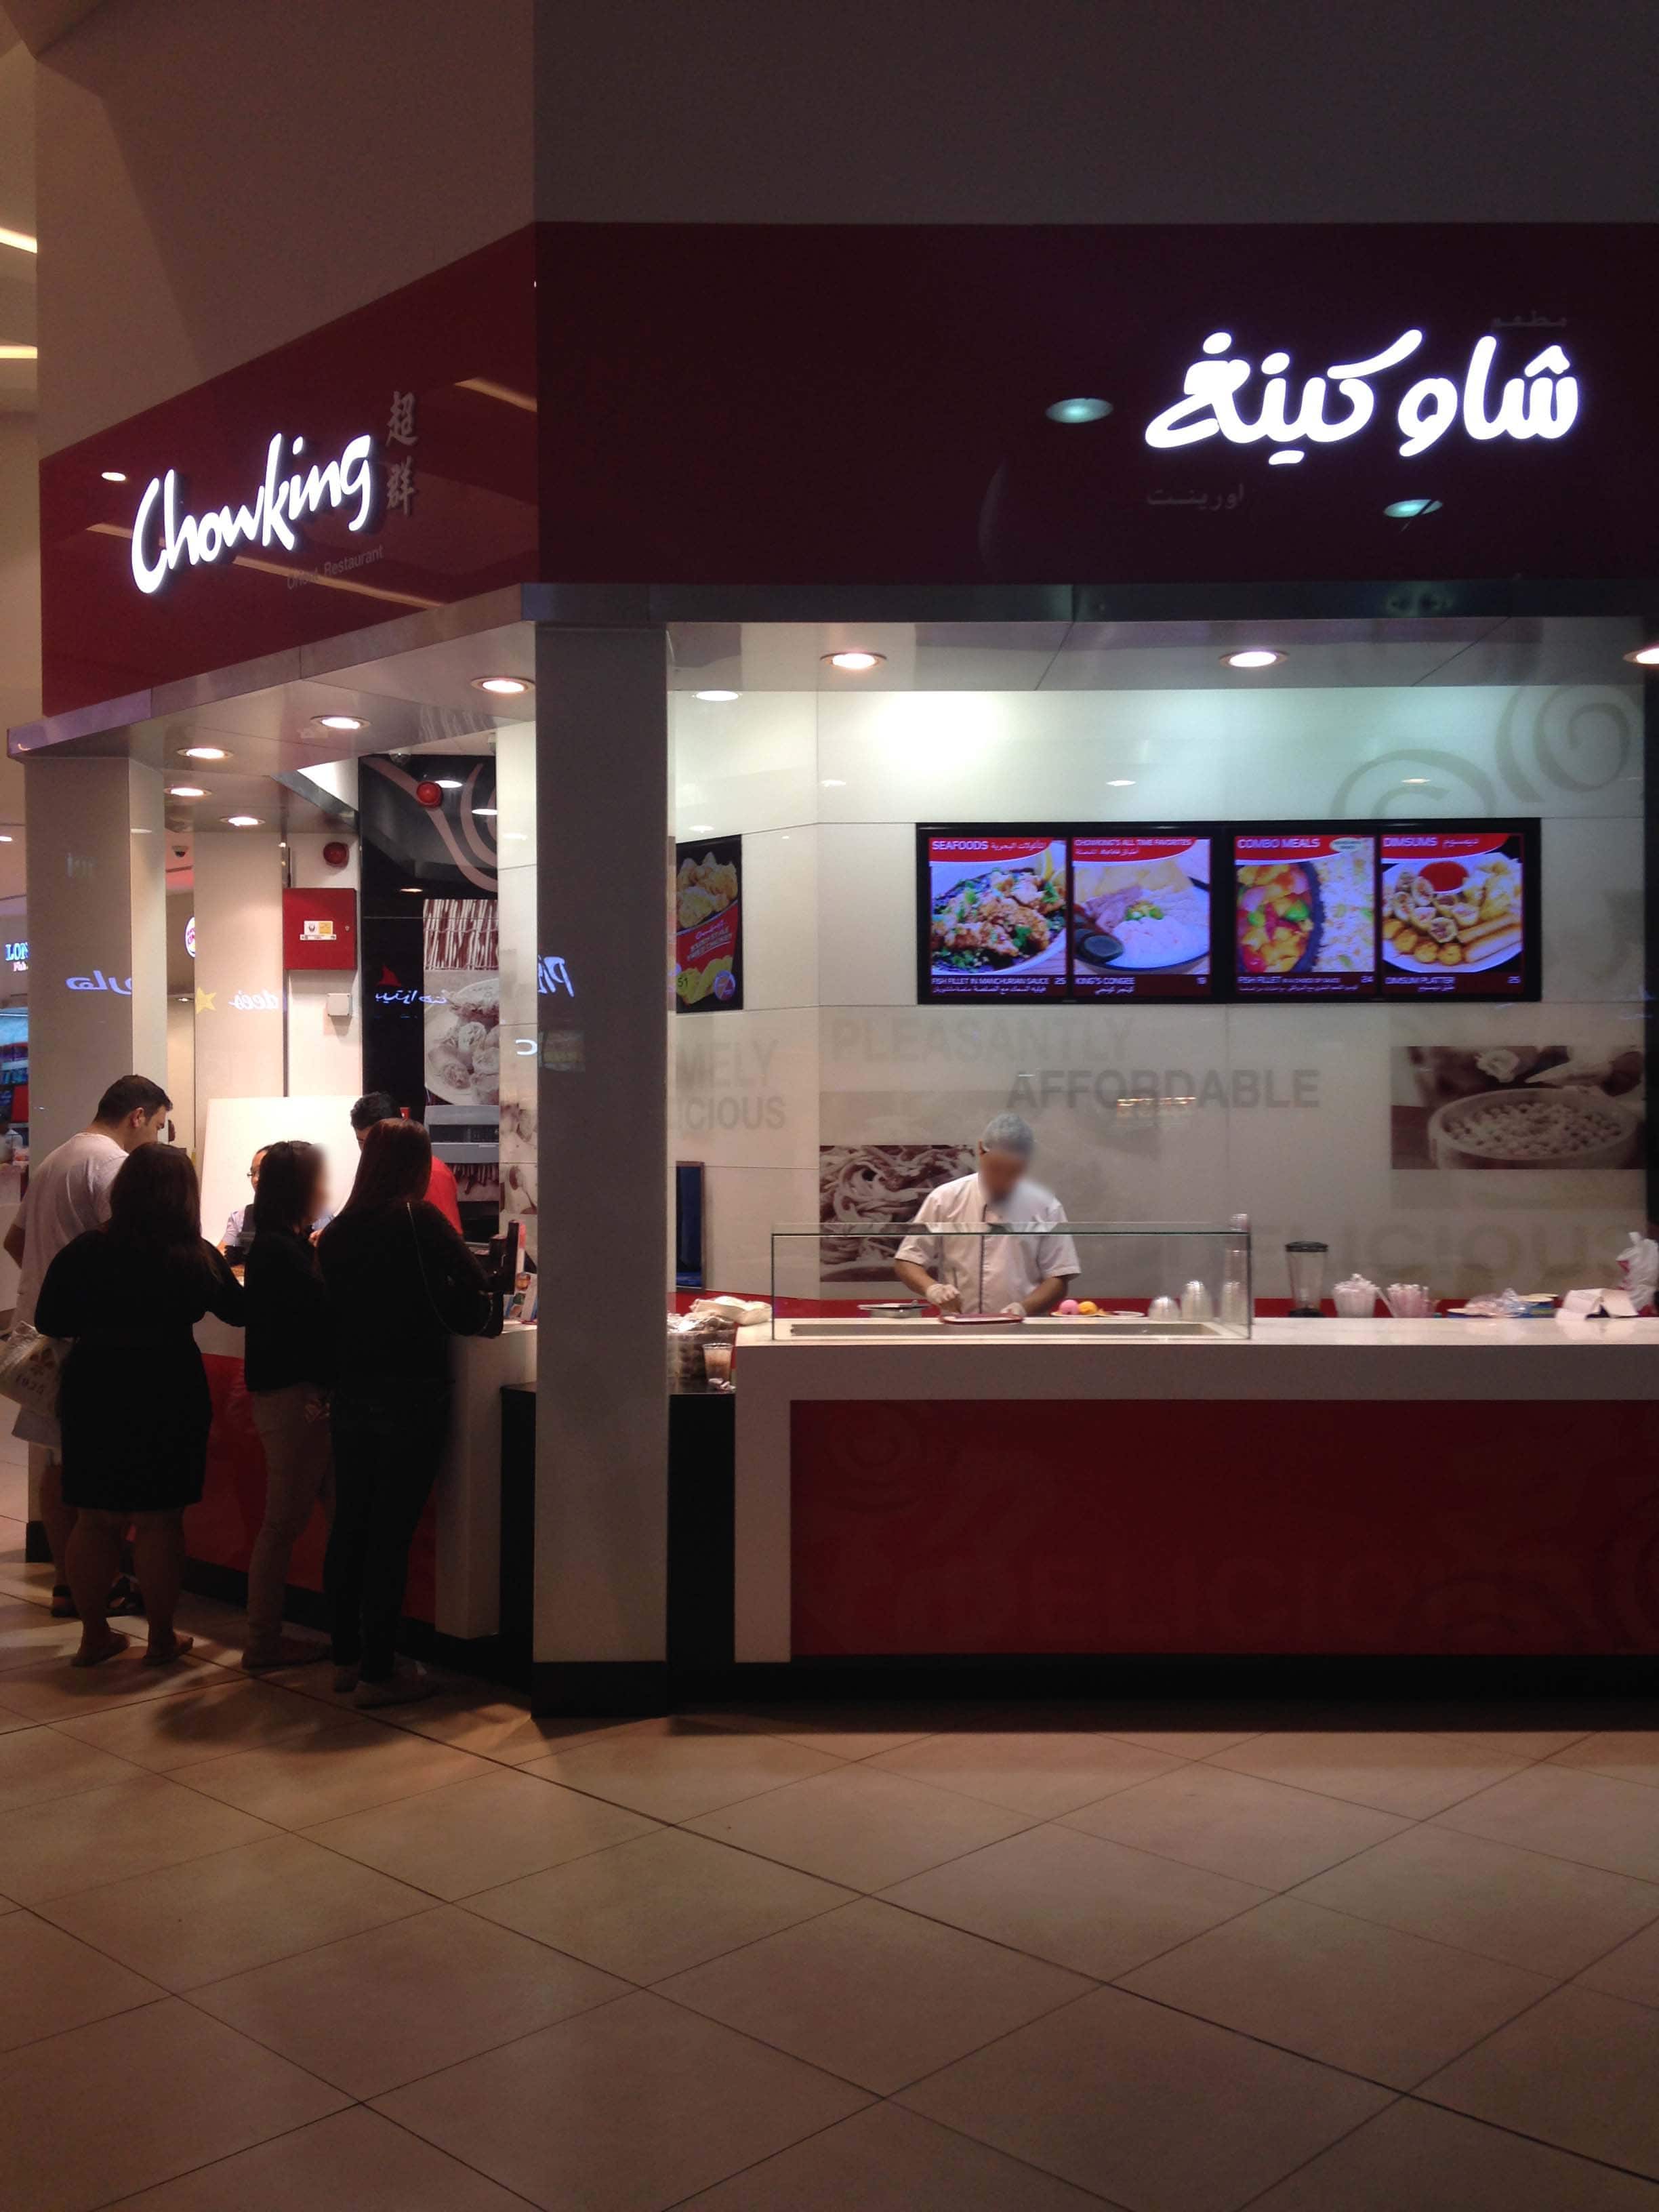 Chowking Dubai | Chinese Restaurant | City Centre Deira